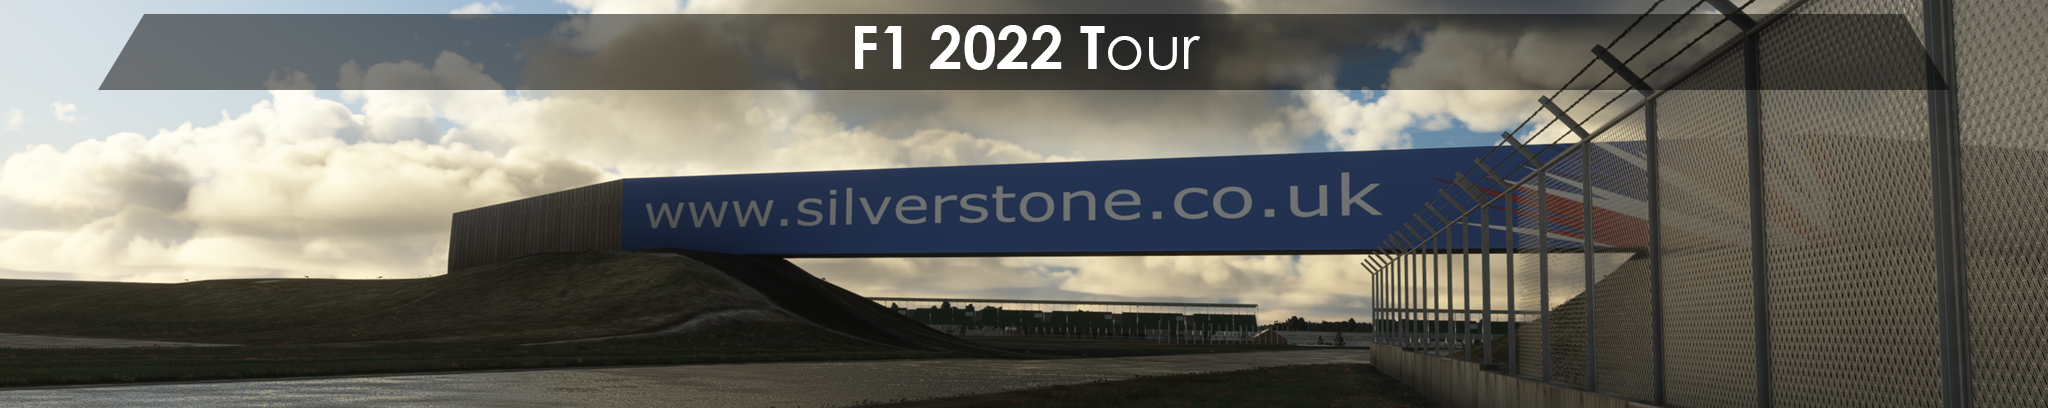 F1 2022 Tour